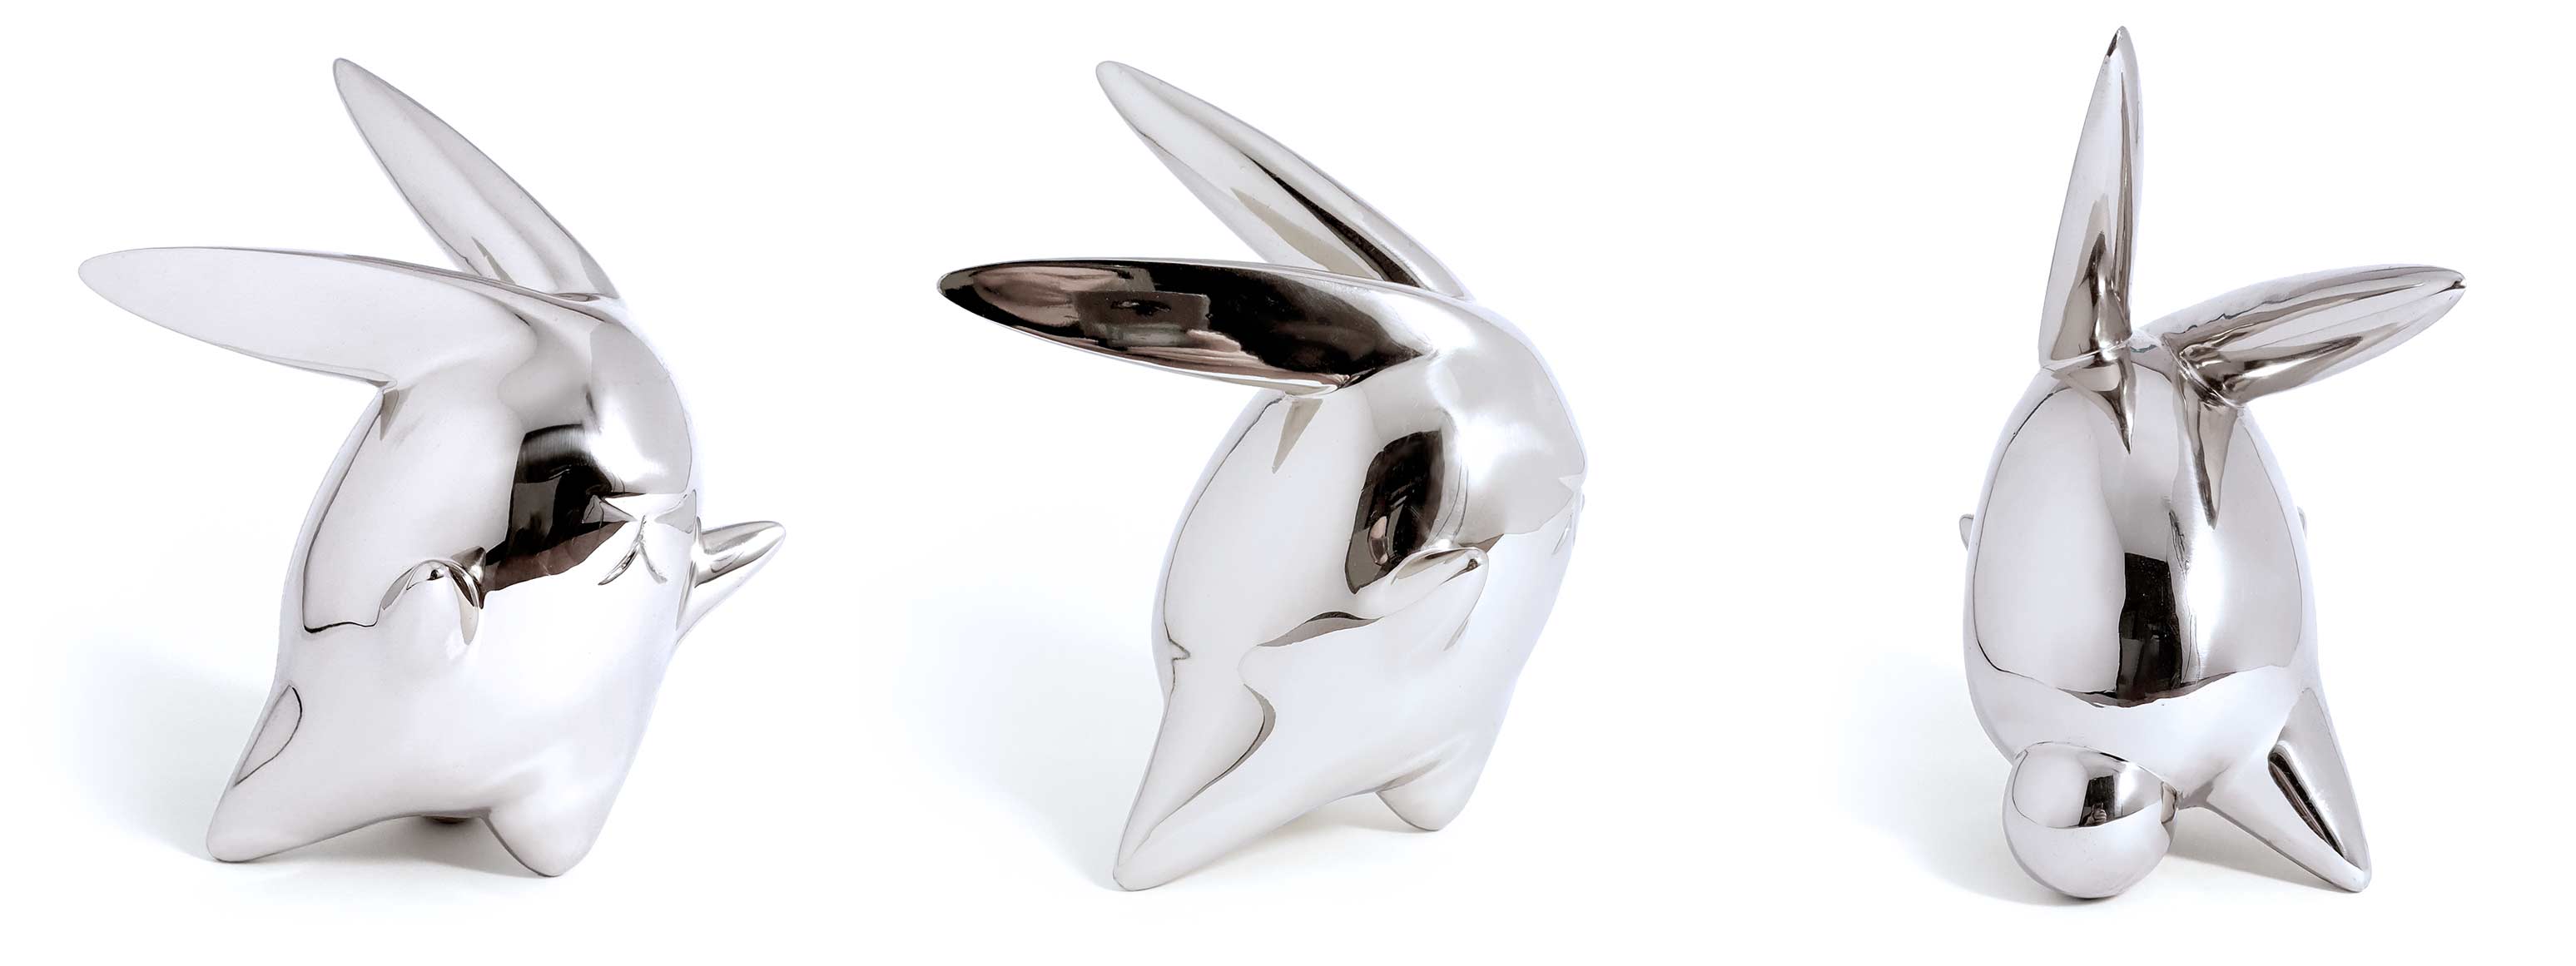 Flight or Fight, bunny rabbit sculpture, Mirror Polished Stainless Steel Sculpture, by artist Ferdi B Dick, banner